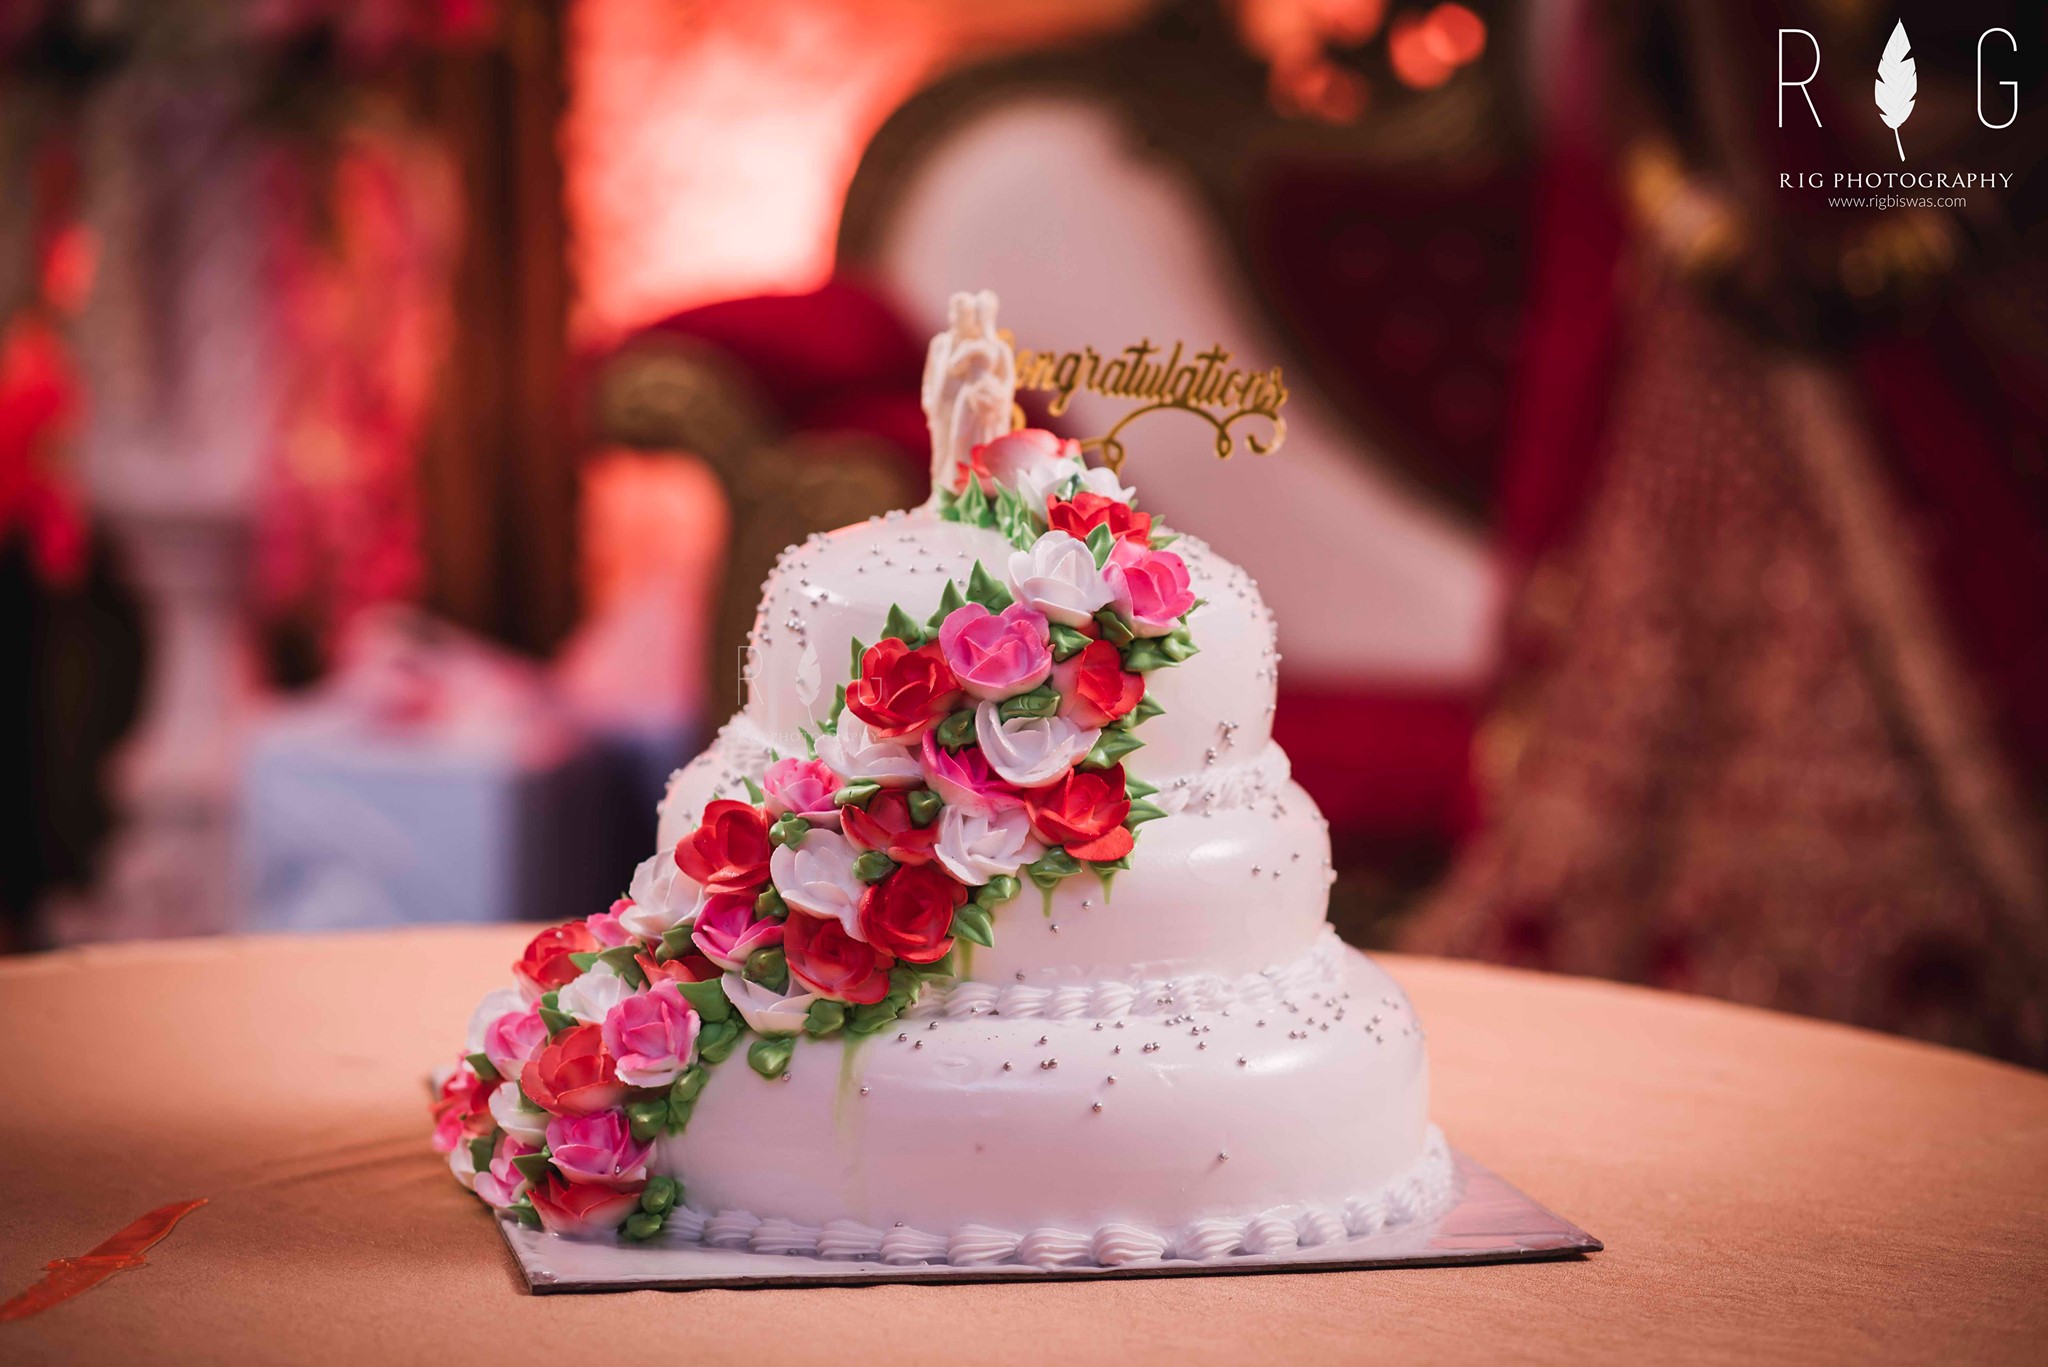 Engagement / Anniversary Theme Designer Cake - Avon Bakers